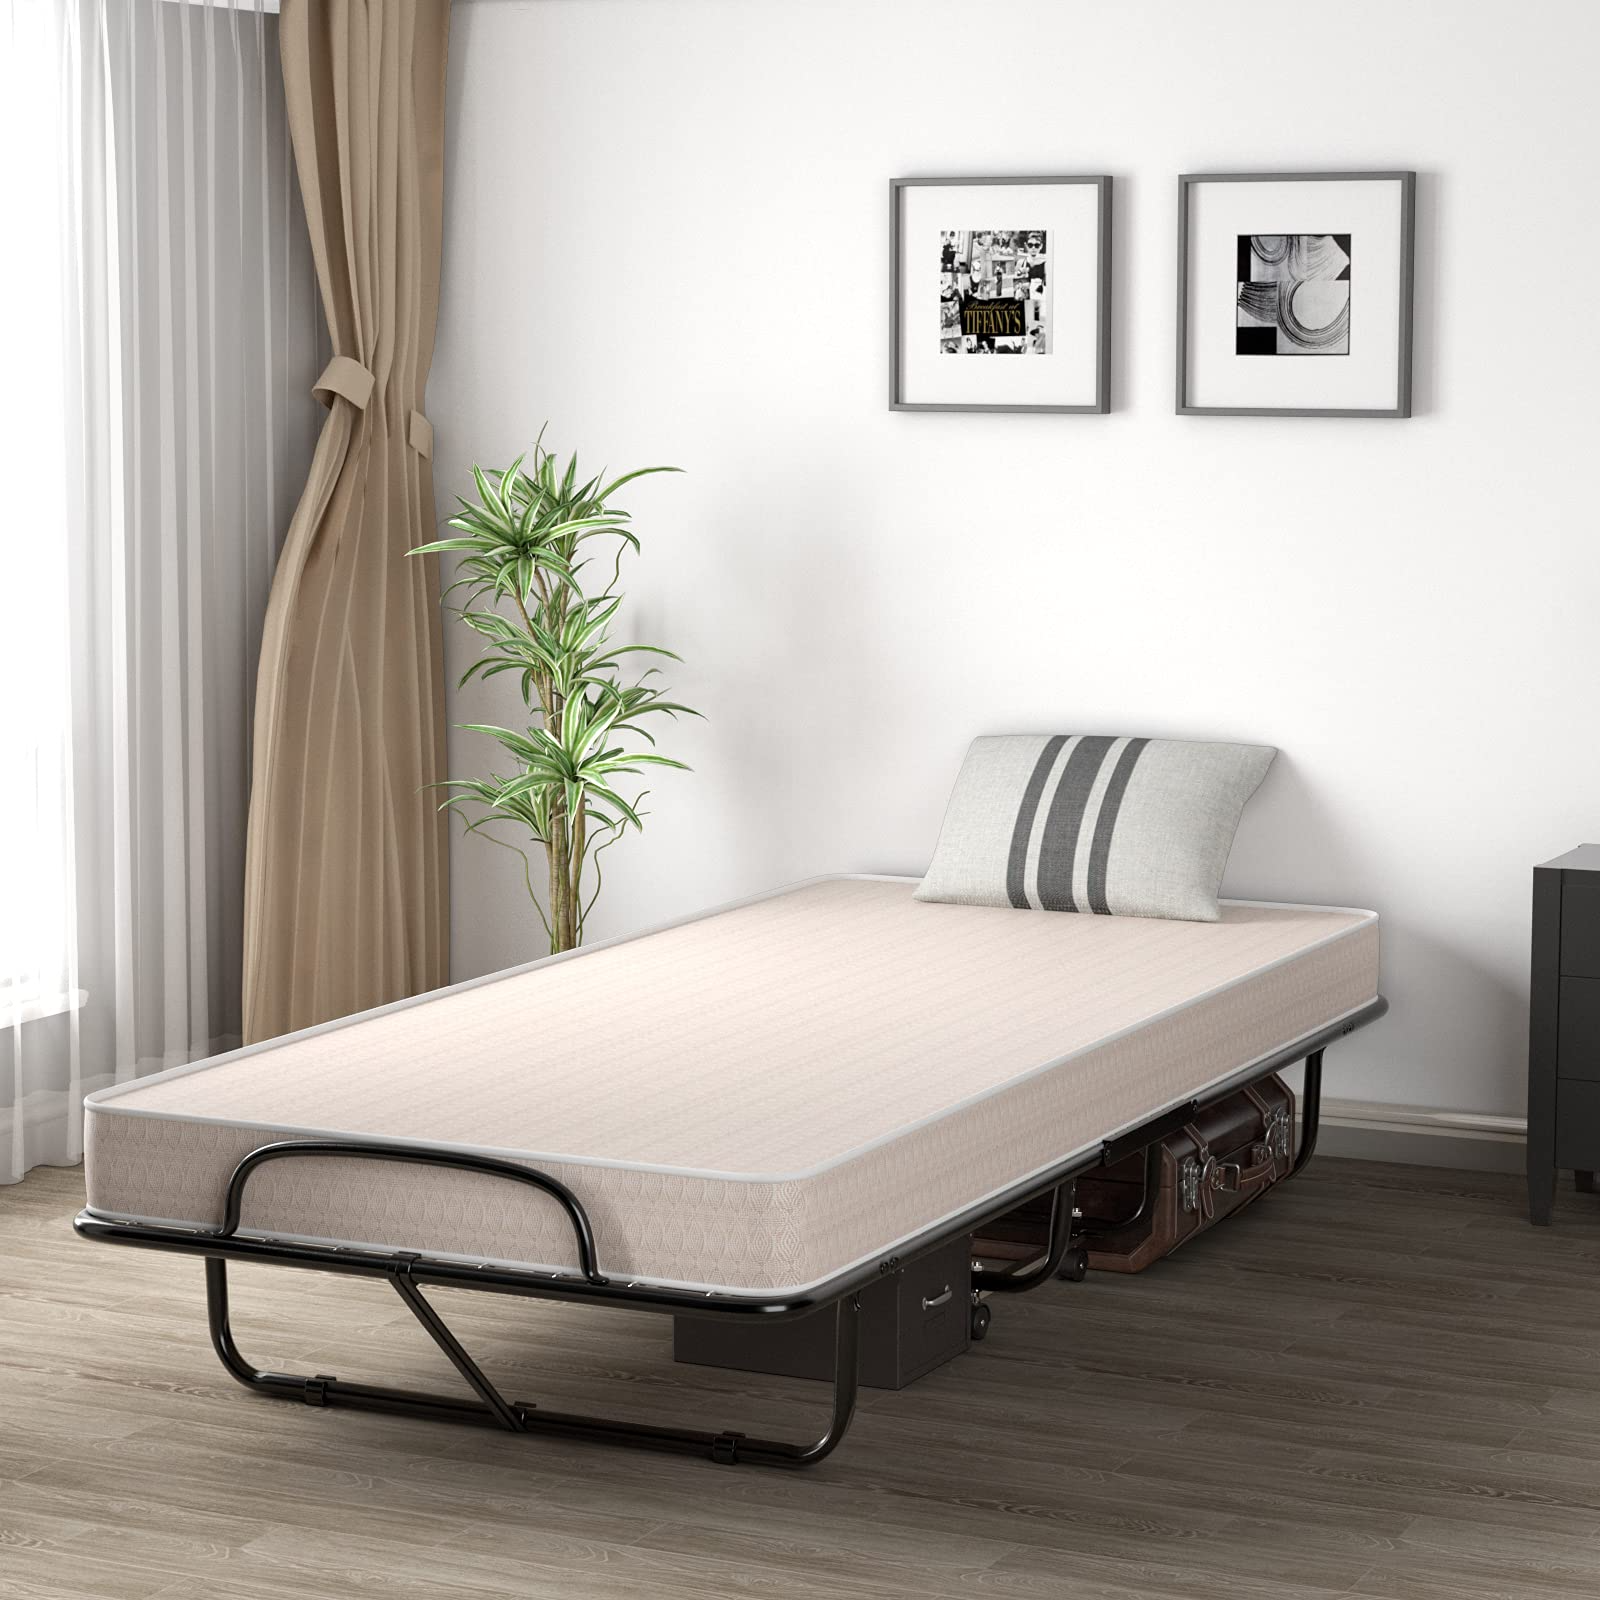 Giantex Rollaway Folding Bed